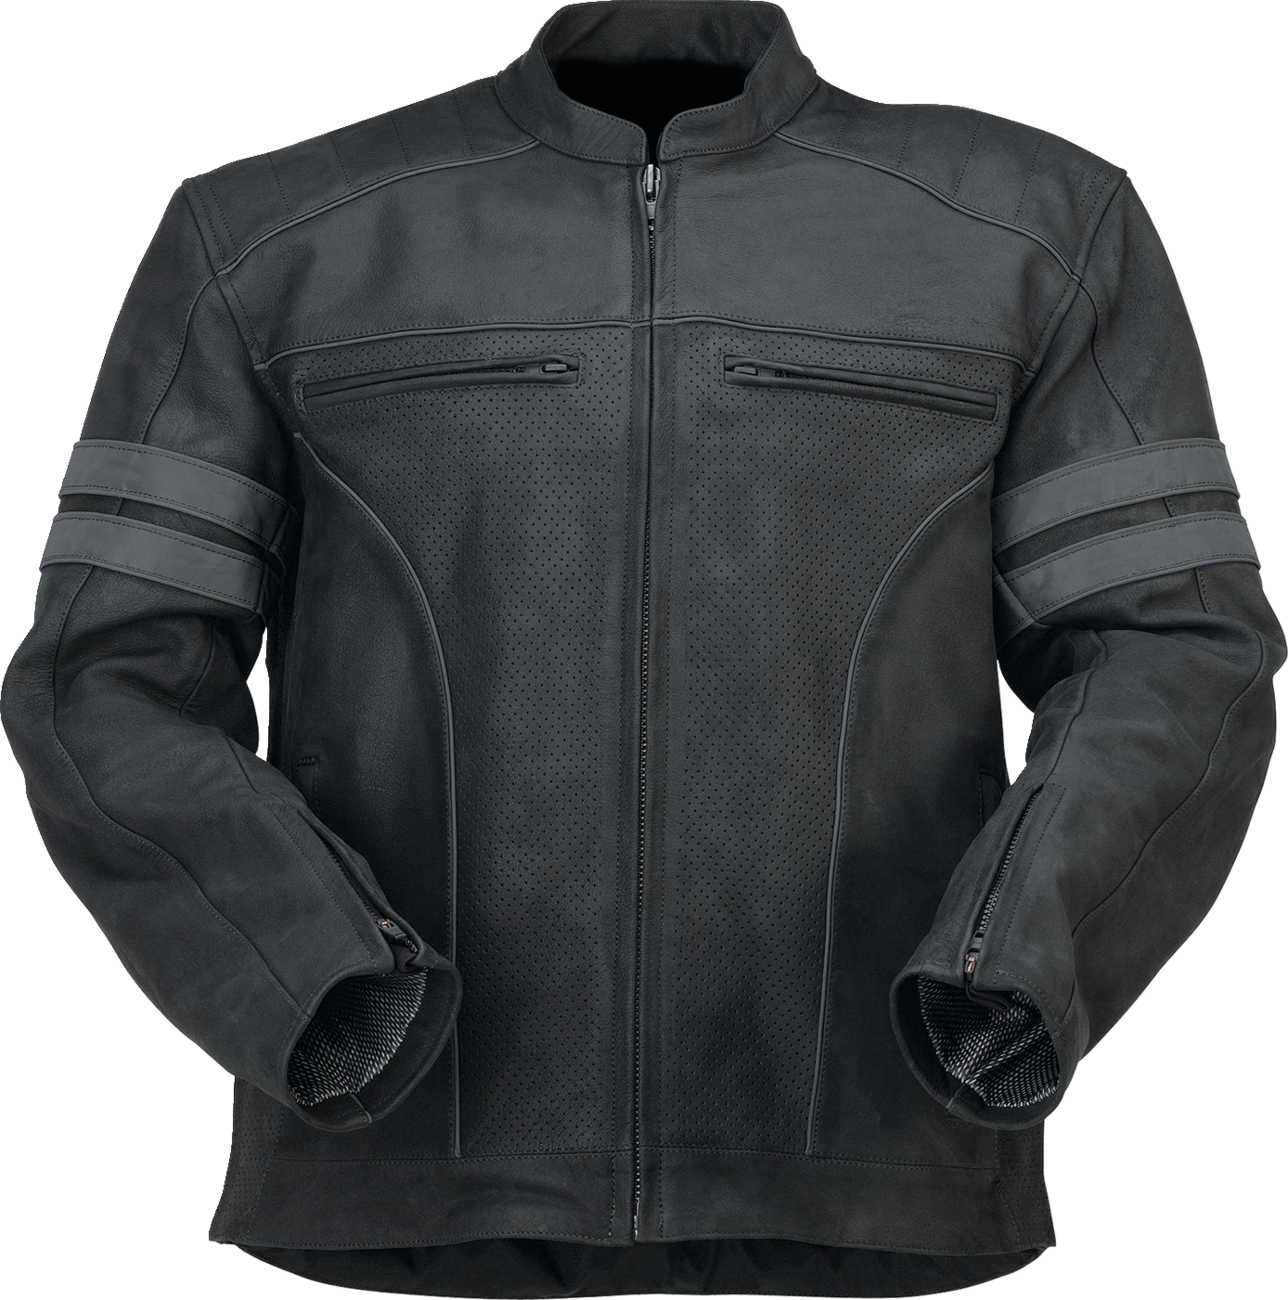 Z1R Remedy Leather Jacket - Black - Medium 2810-3890